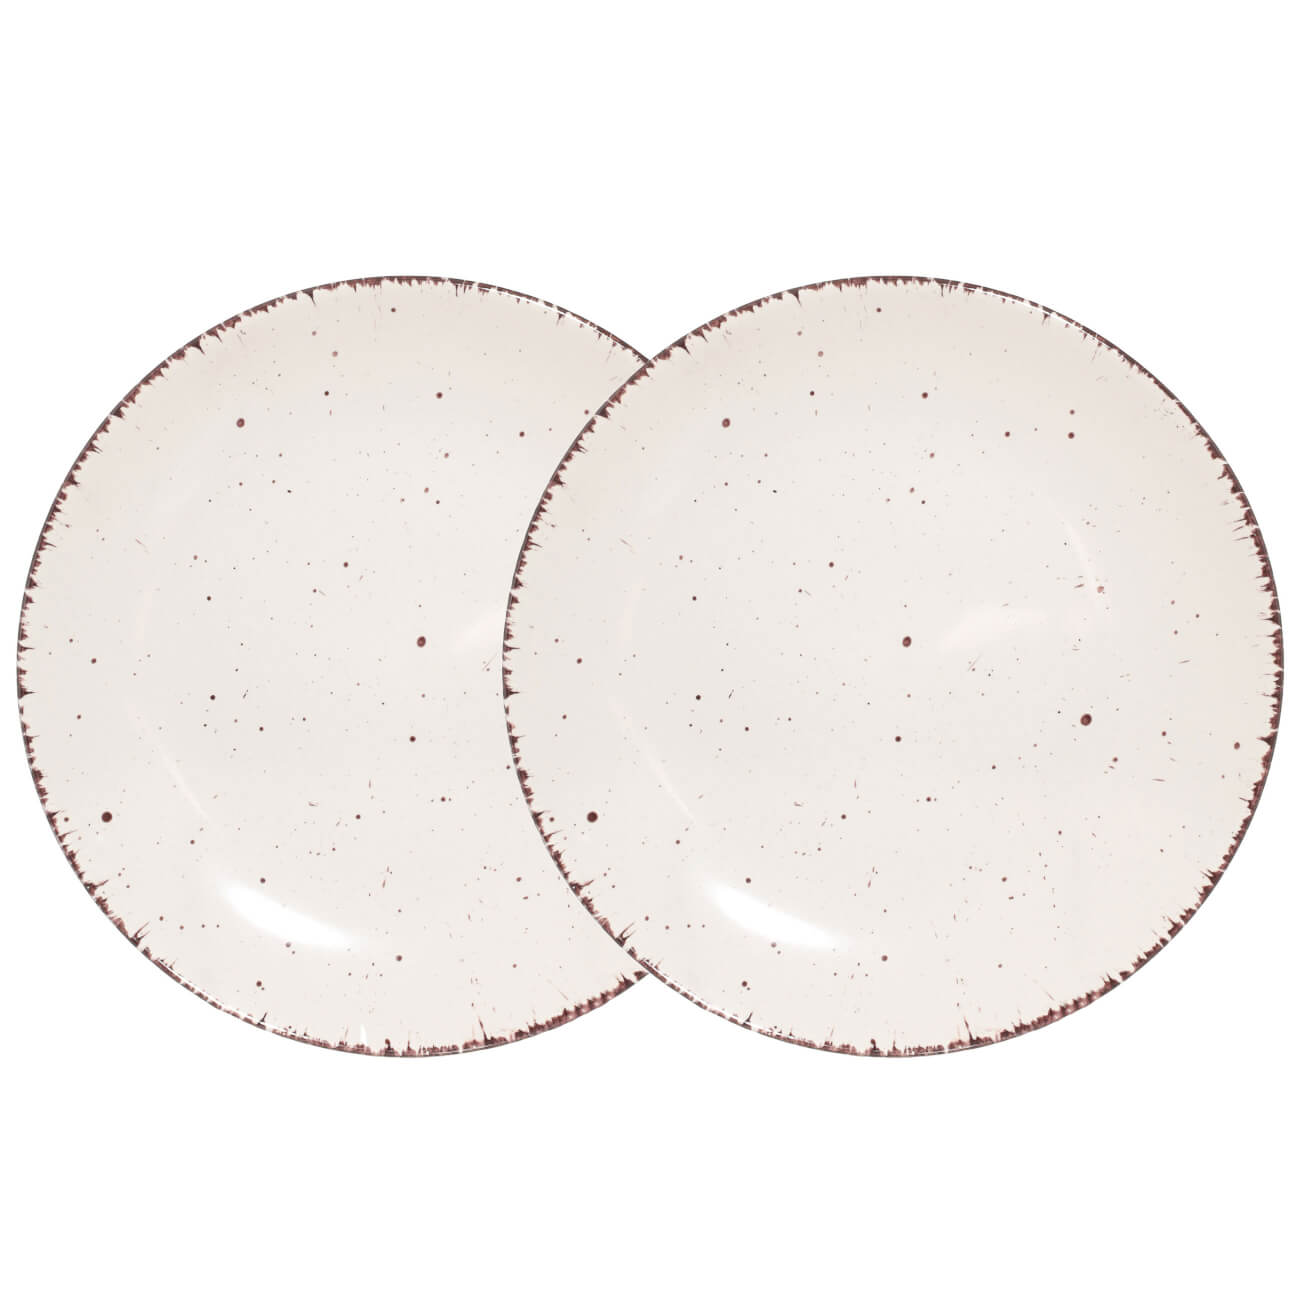 тарелка закусочная 20 см стекло серебристая antares Тарелка закусочная, 21 см, 2 шт, керамика, бежевая, в крапинку, Speckled